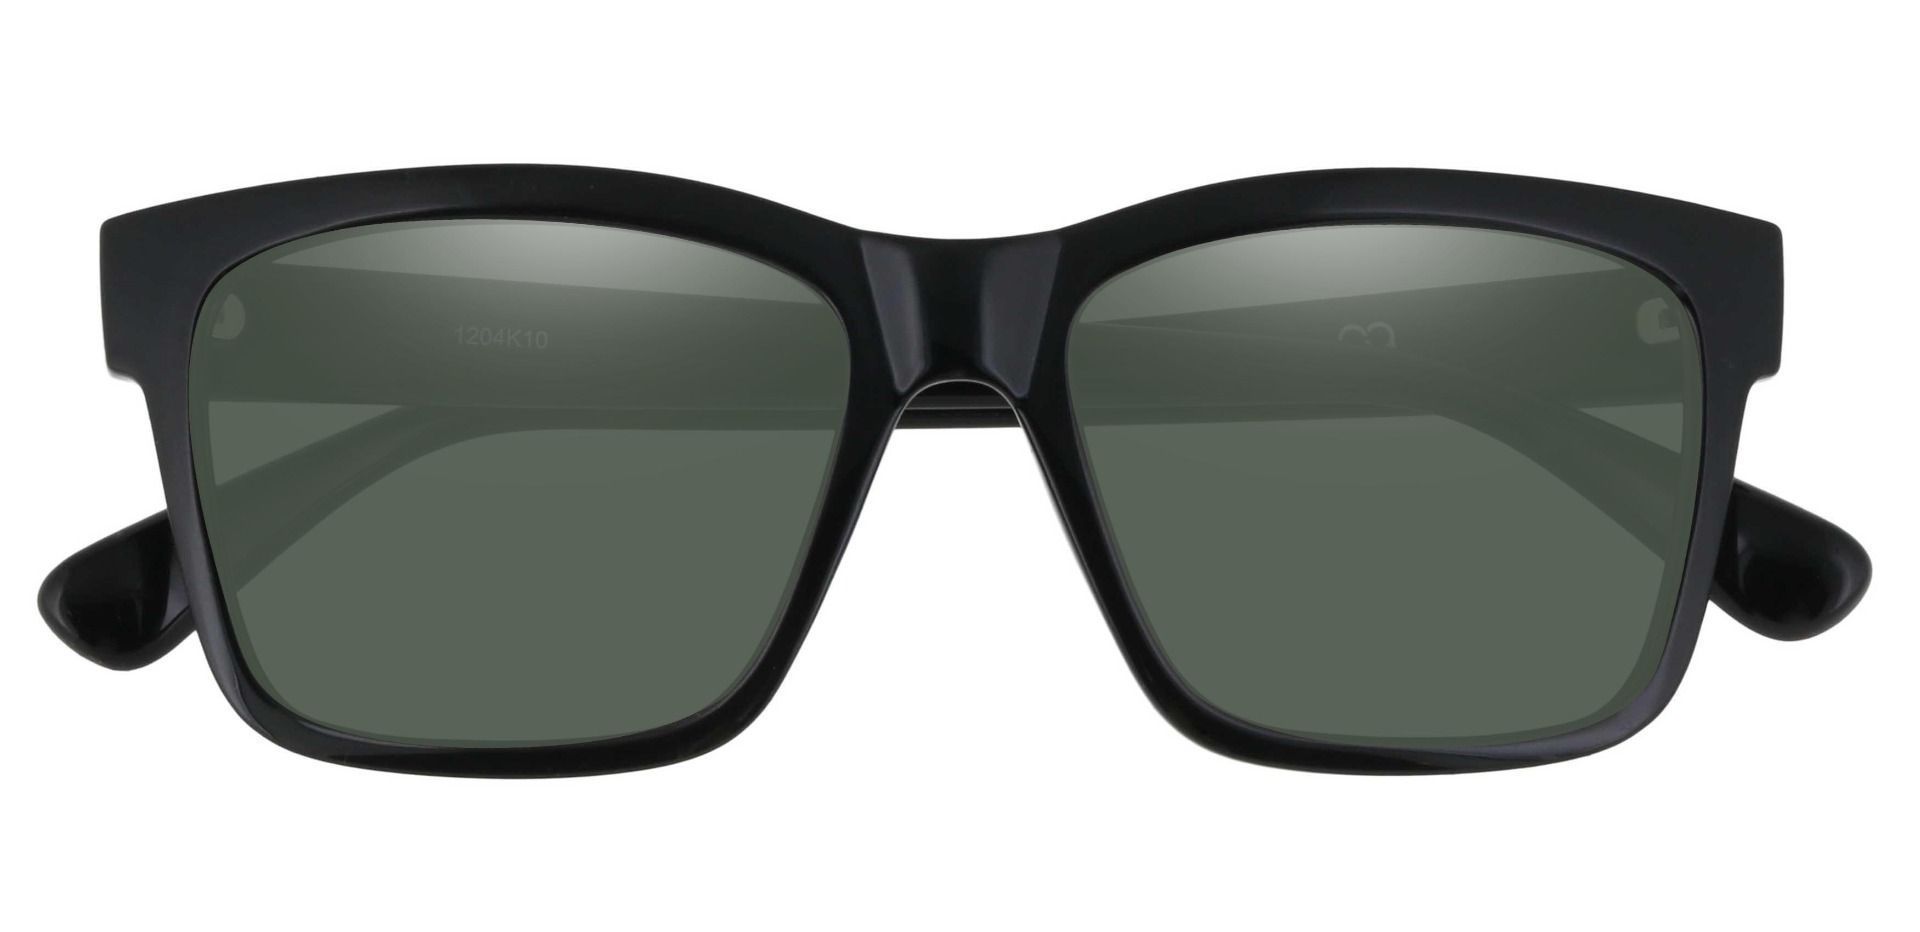 Brinley Square Non-Rx Sunglasses - Black Frame With Green Lenses